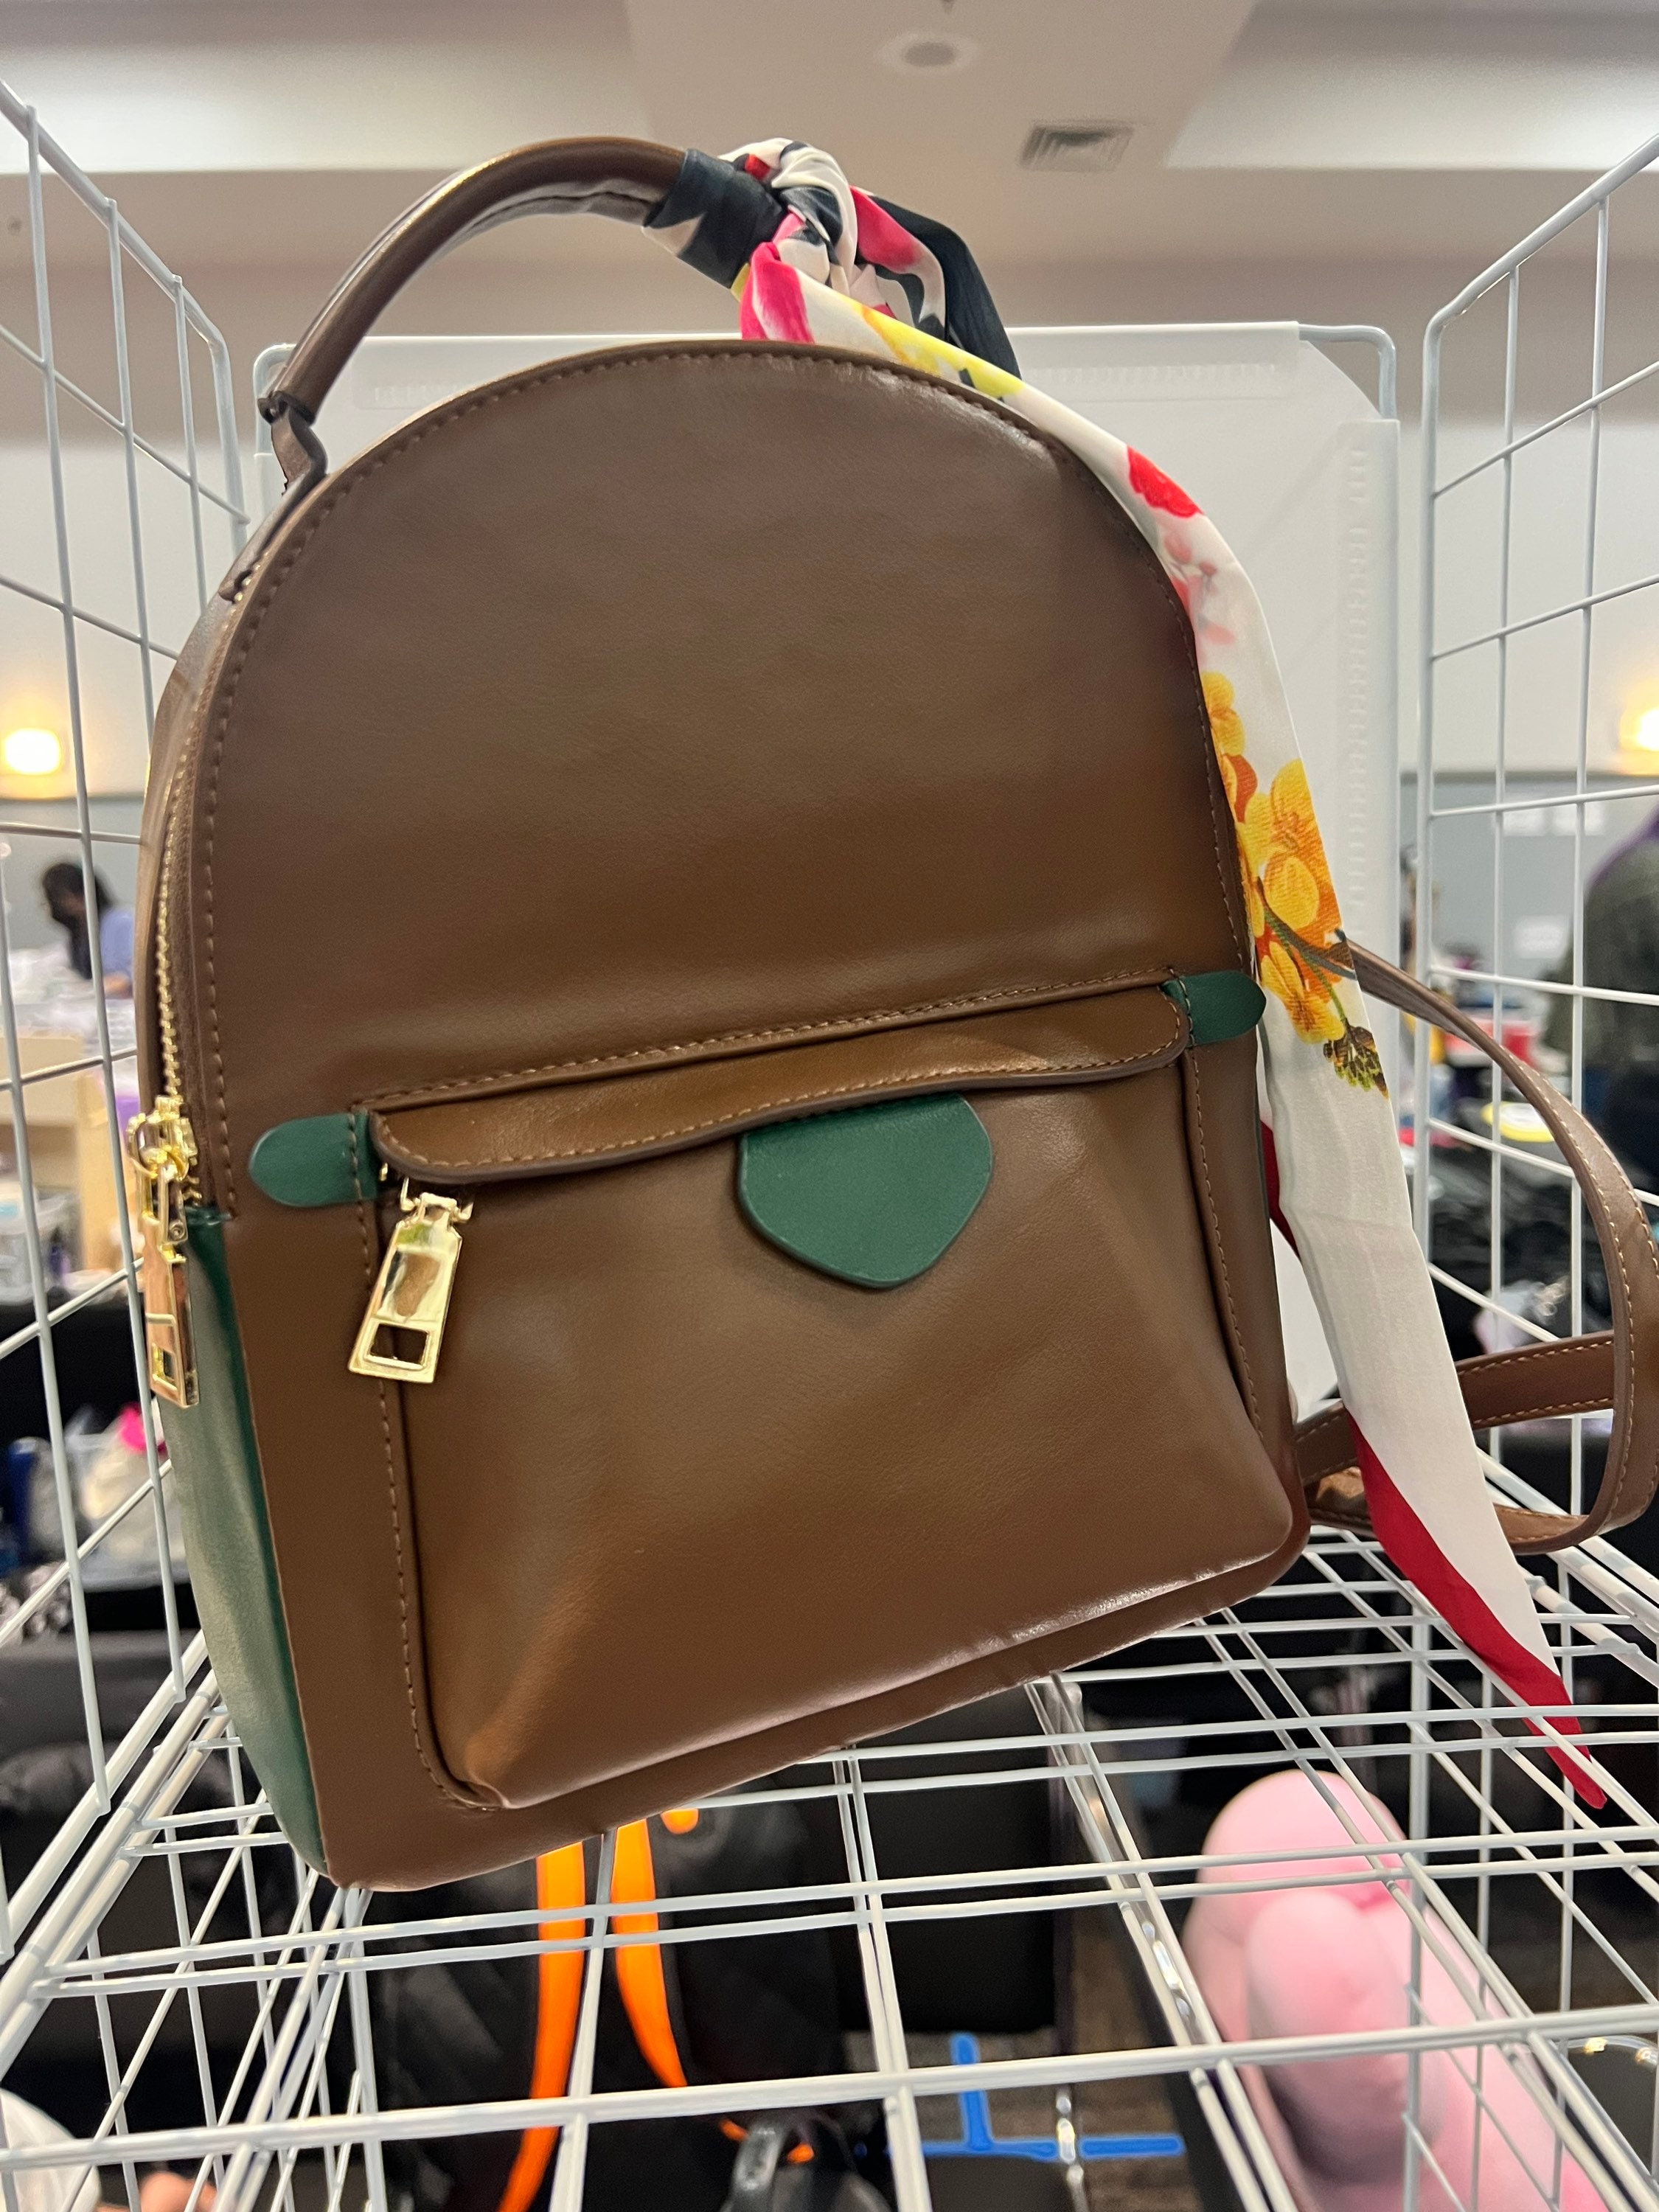 Funny Graphic print Spring Day Jimin Edit USB Charge Backpack men School  bags Women bag Travel laptop bag